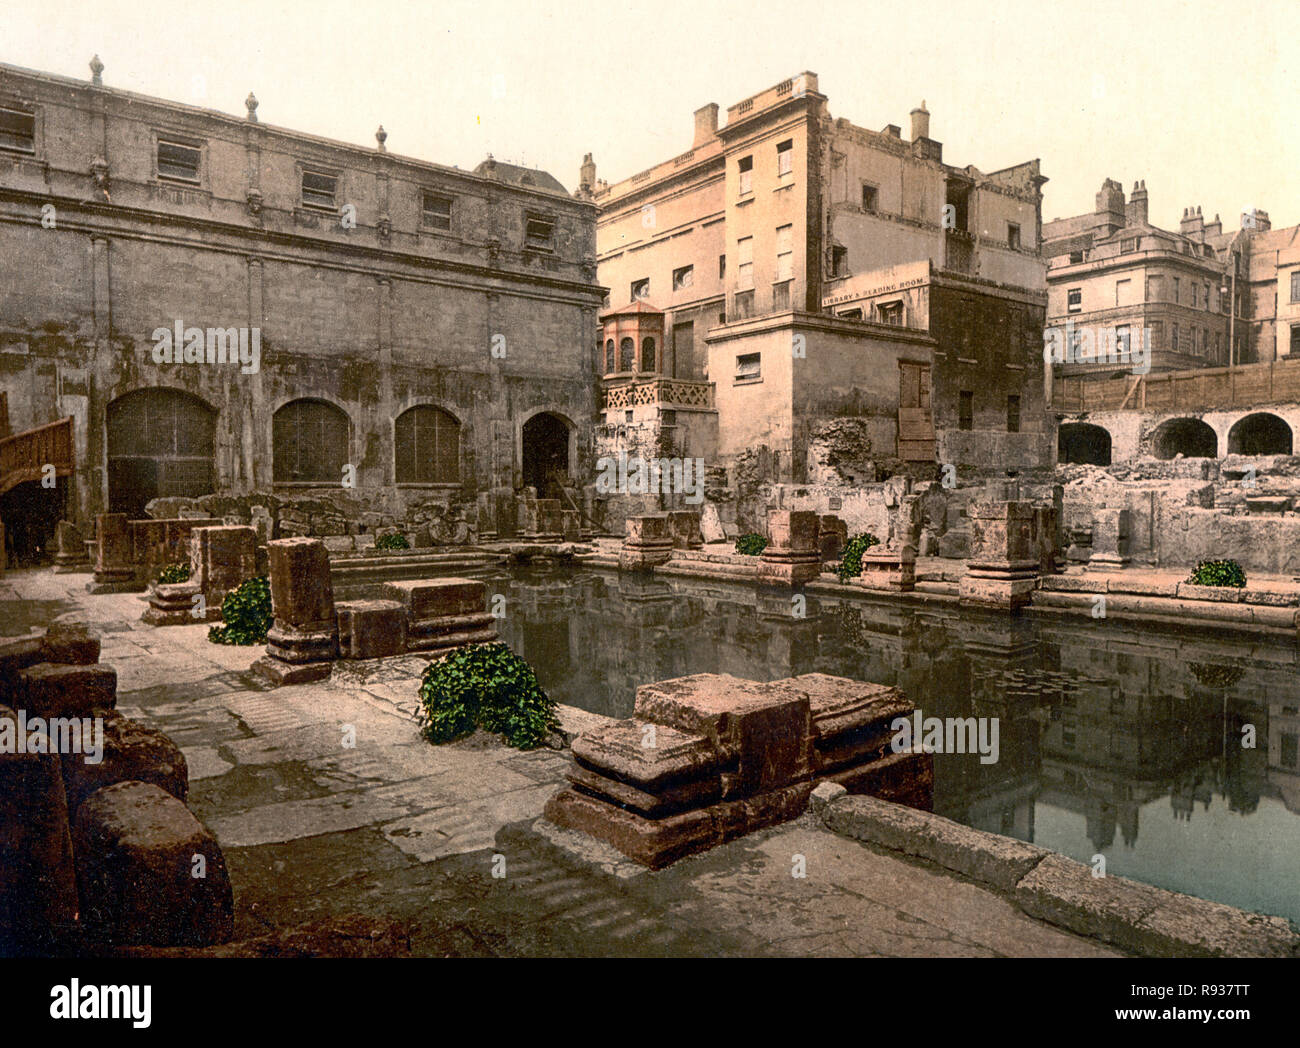 Roman Baths and Abbey, Bath, England, circa 1900 Stock Photo